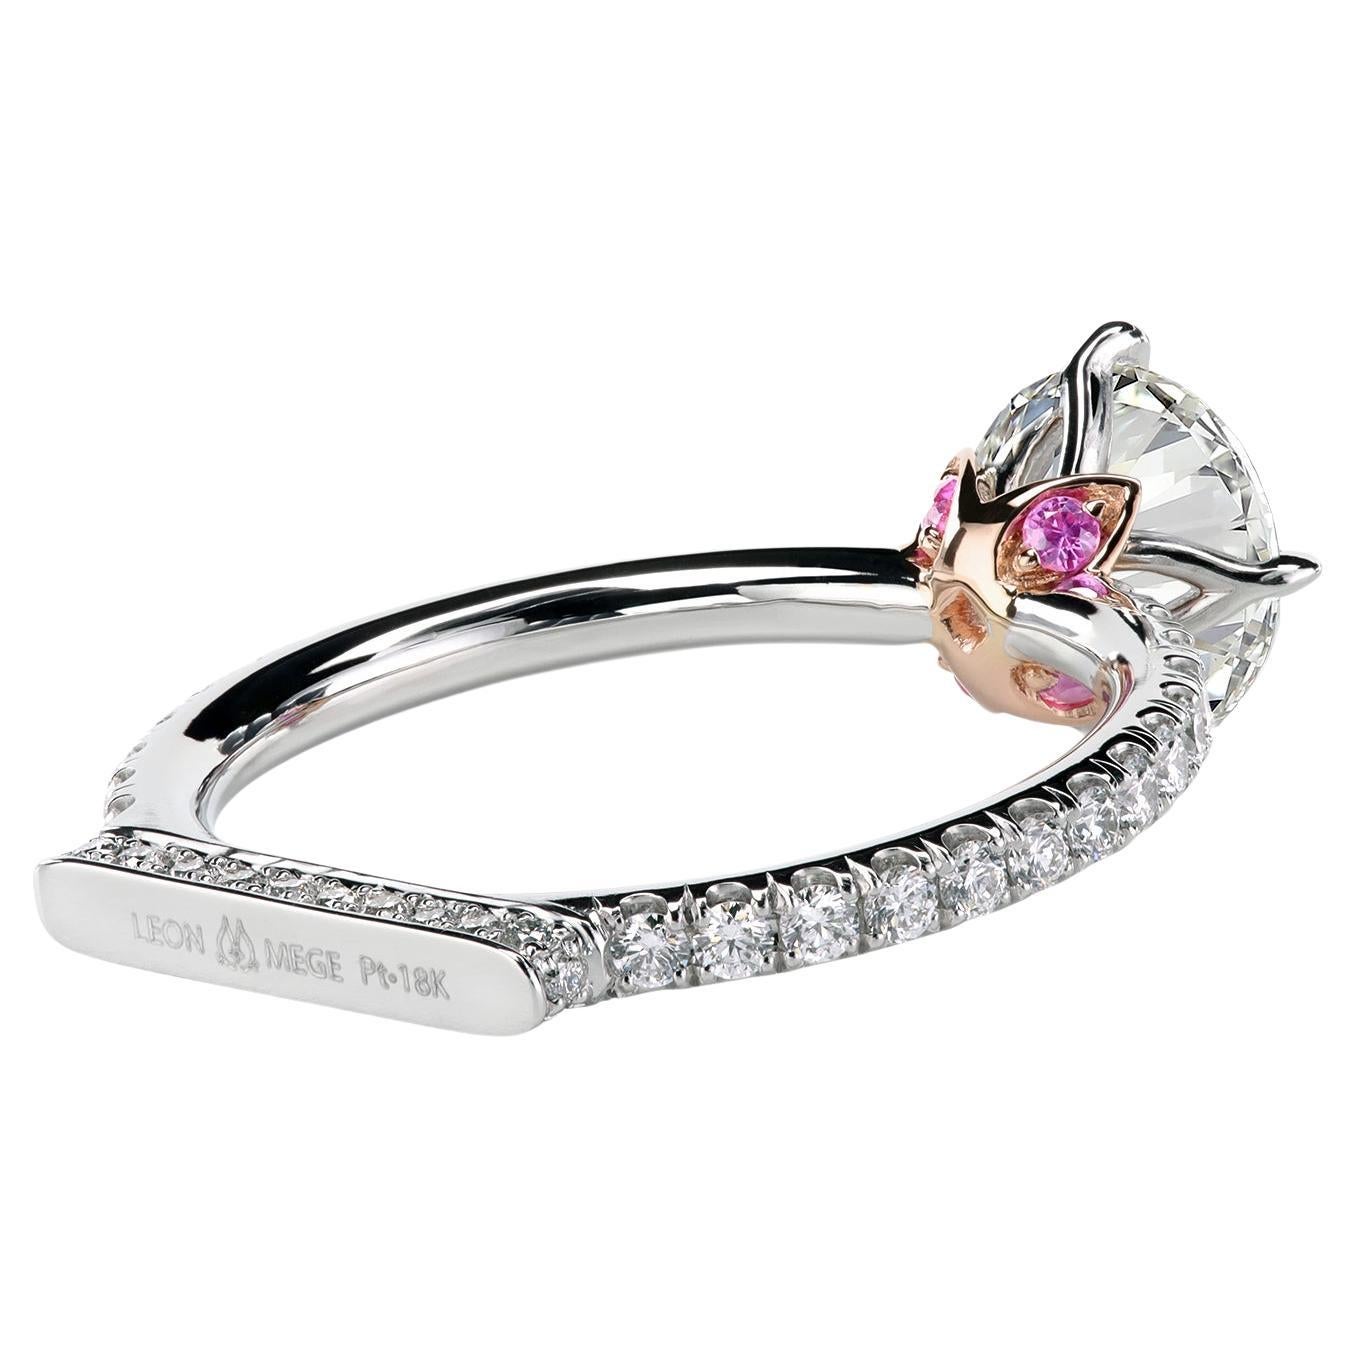 Leon Mege "Flamberge" Engagement Ring 2-carat GIA H/SI1 Round Diamond Micro Pave